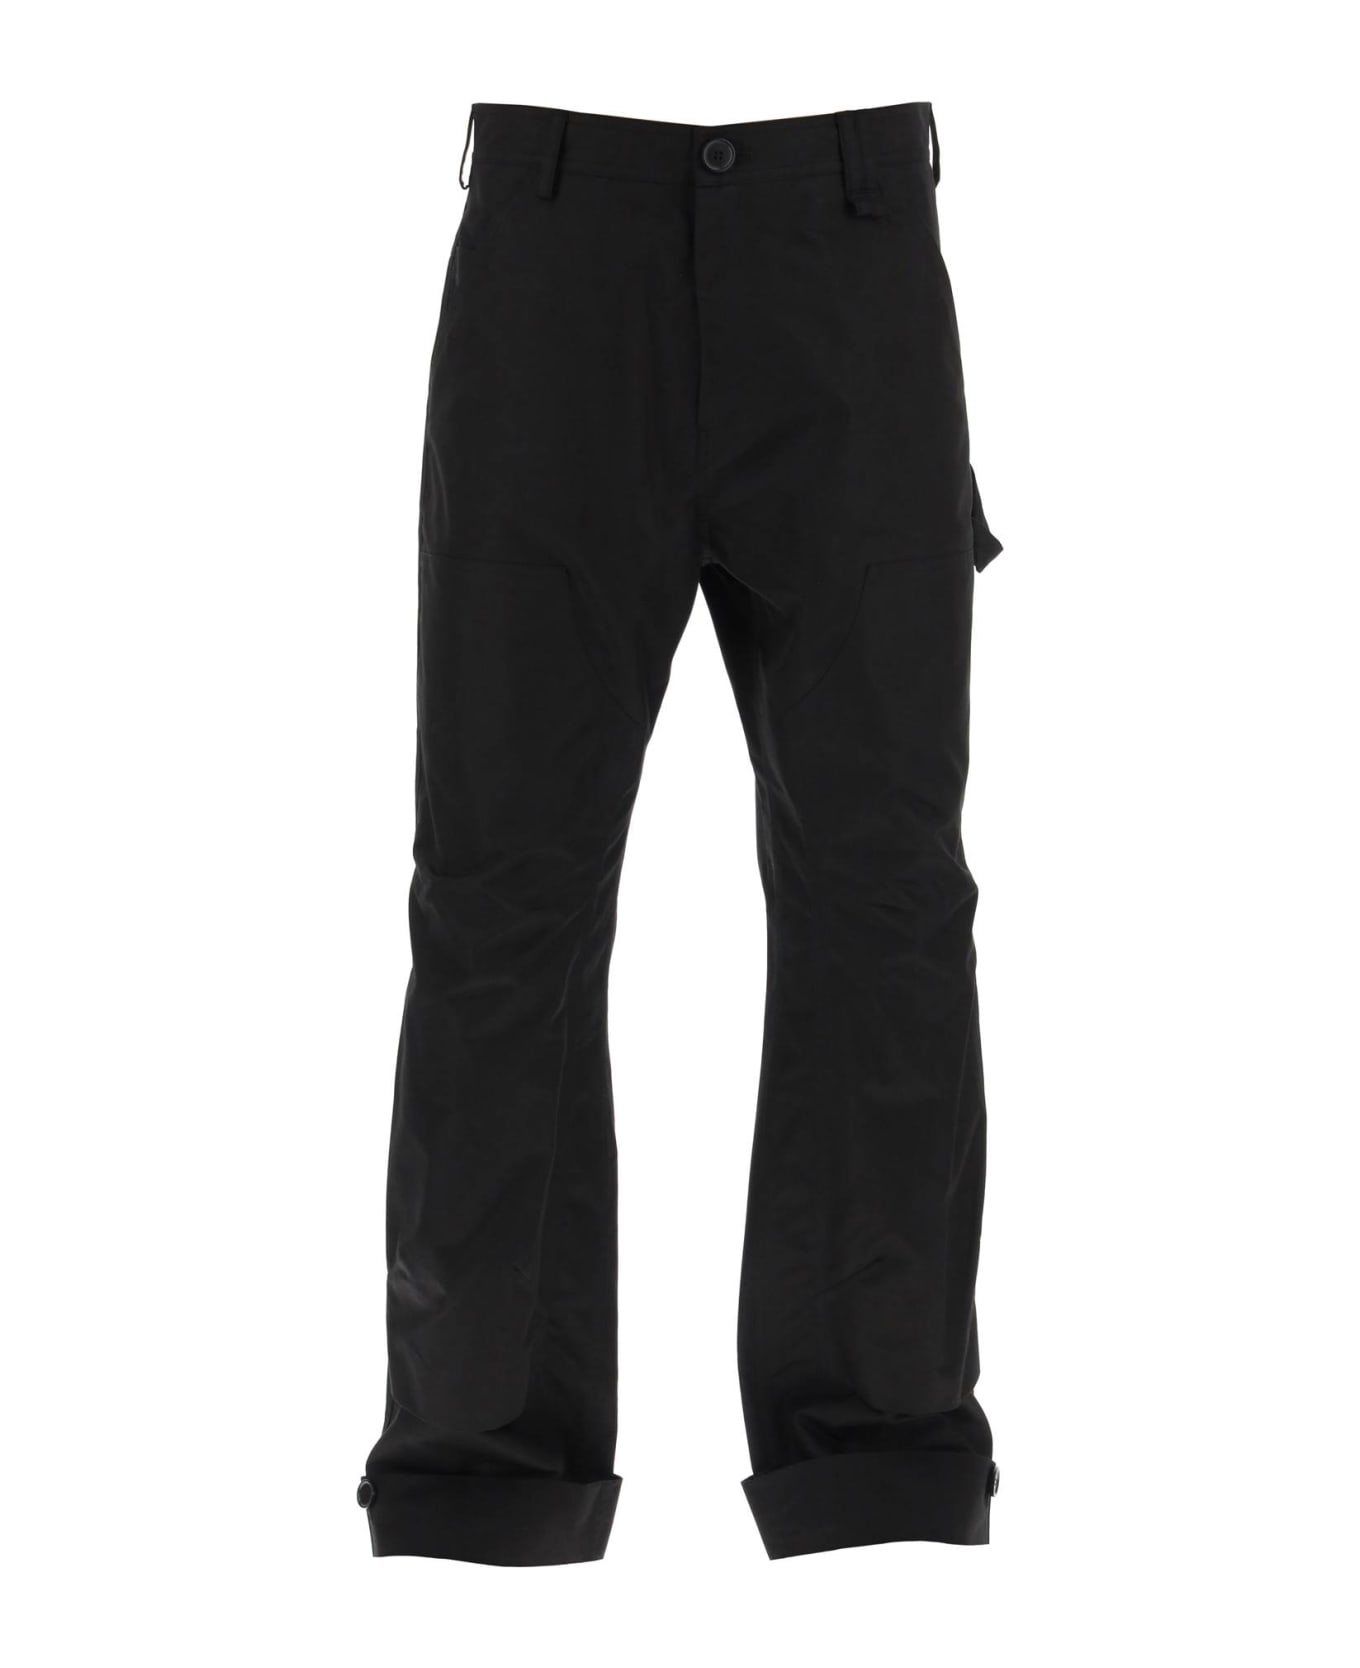 Simone Rocha Workwear Twill Pants - BLACK (Black)